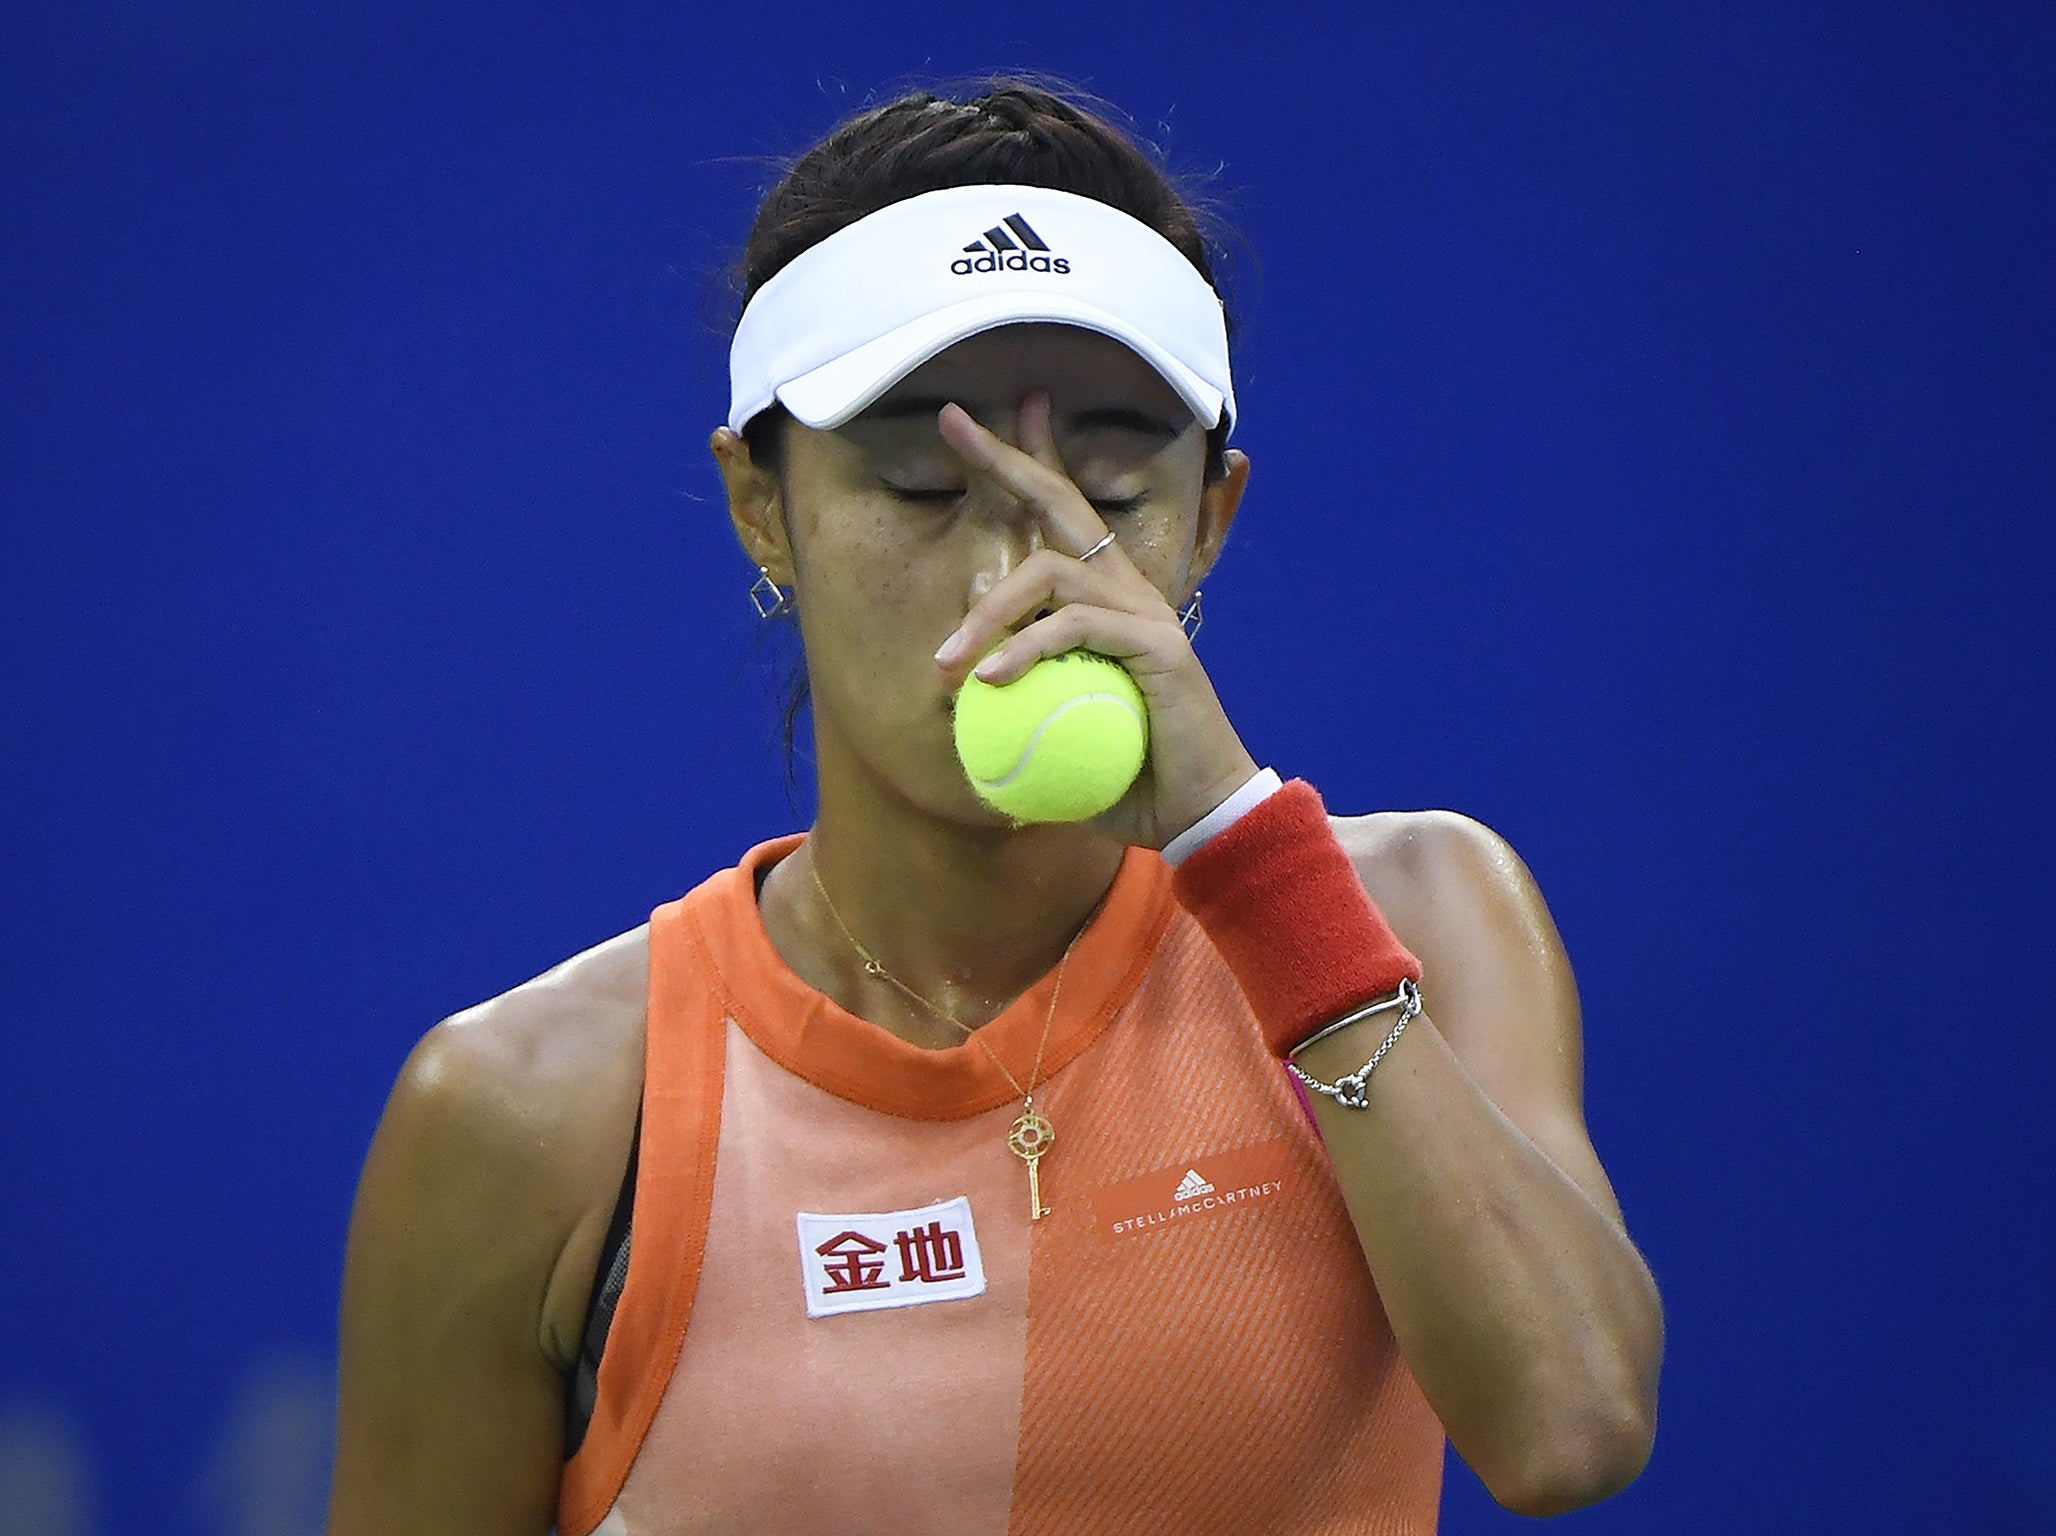 Wang could not prevent Pliskova from progressing